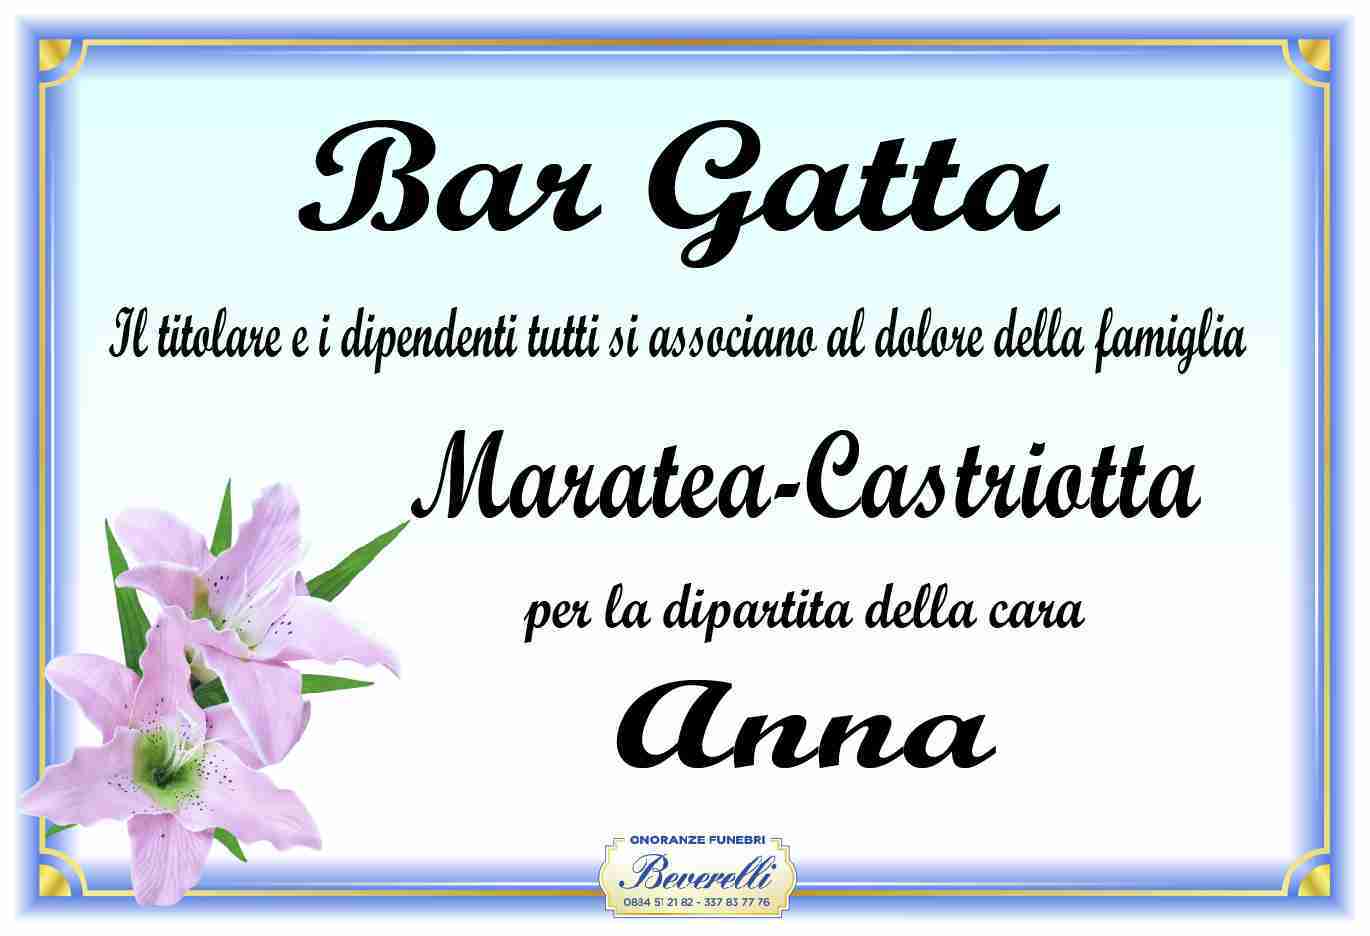 Anna Castriotta